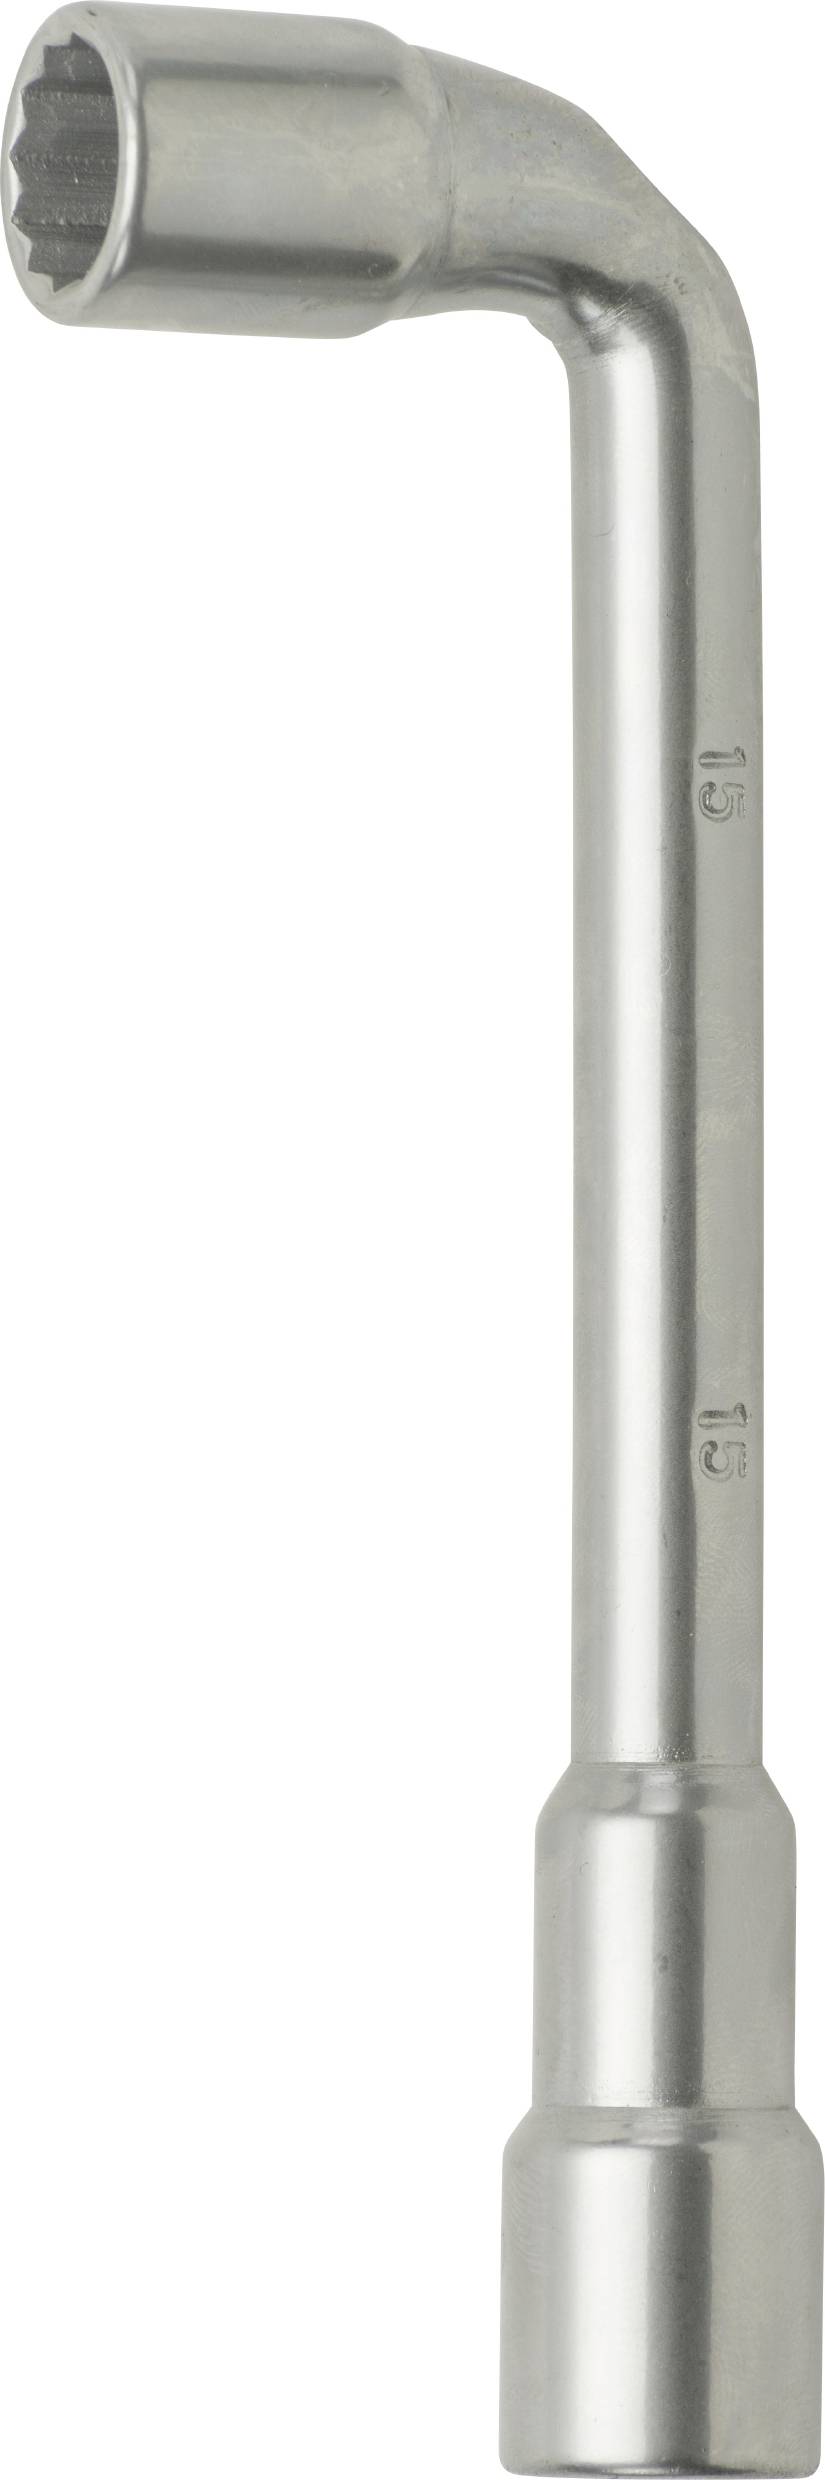 KWB 470110 Ringschlüssel 1 Stück 10 mm